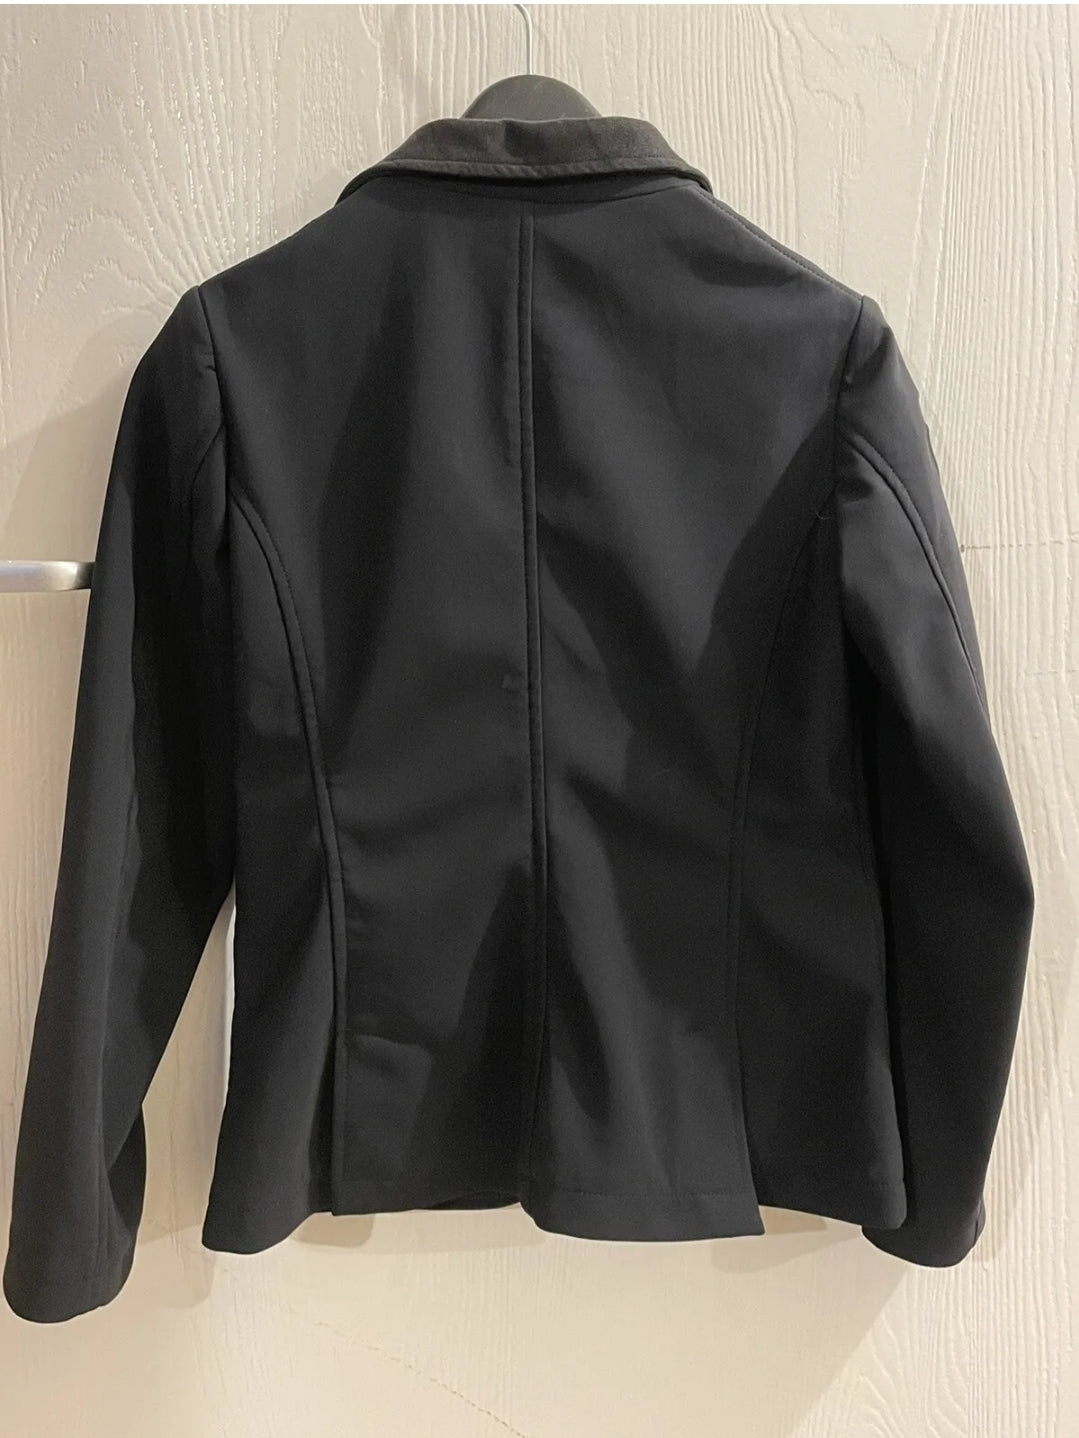 Cavalleria Toscana black show jacket, age 6 to 8